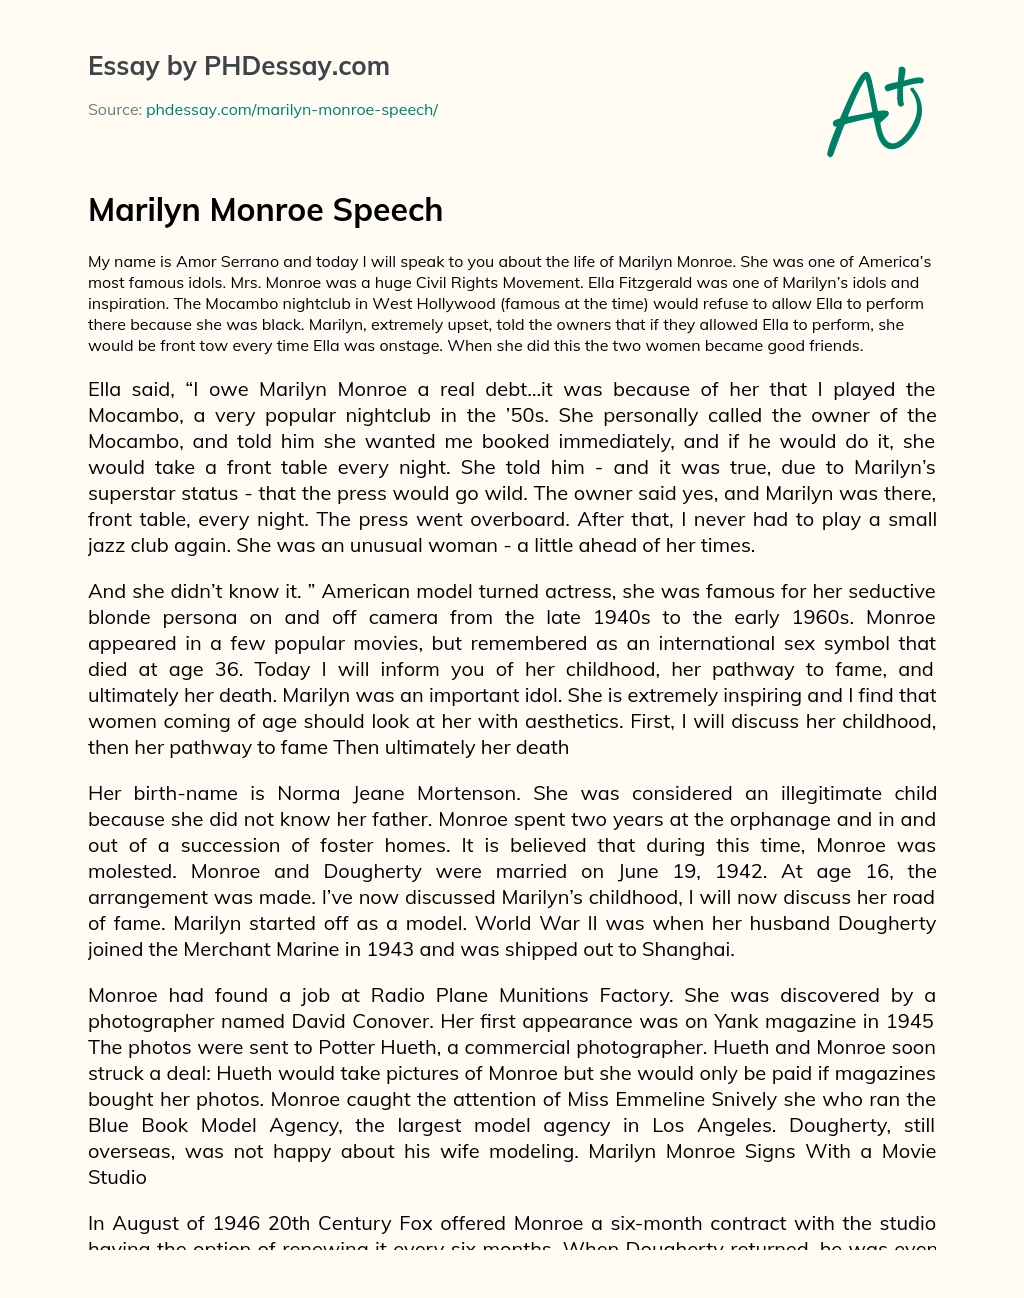 Marilyn Monroe Speech essay